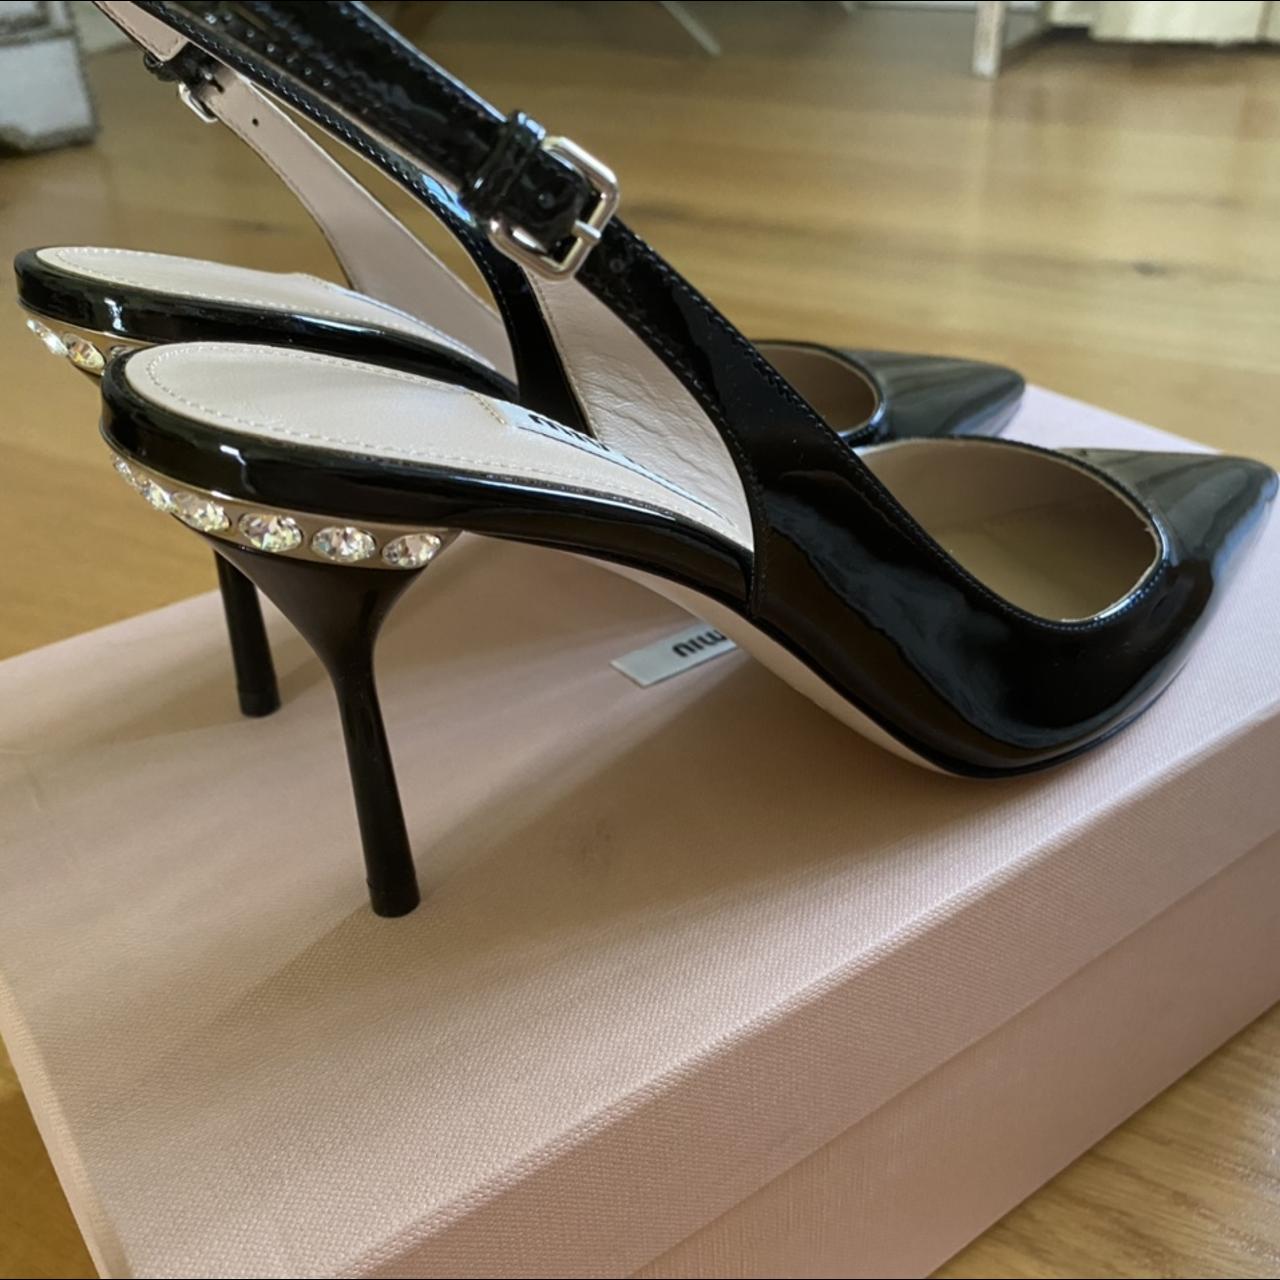 New Miu Miu Calzature Donna Shoes, size 37, black...